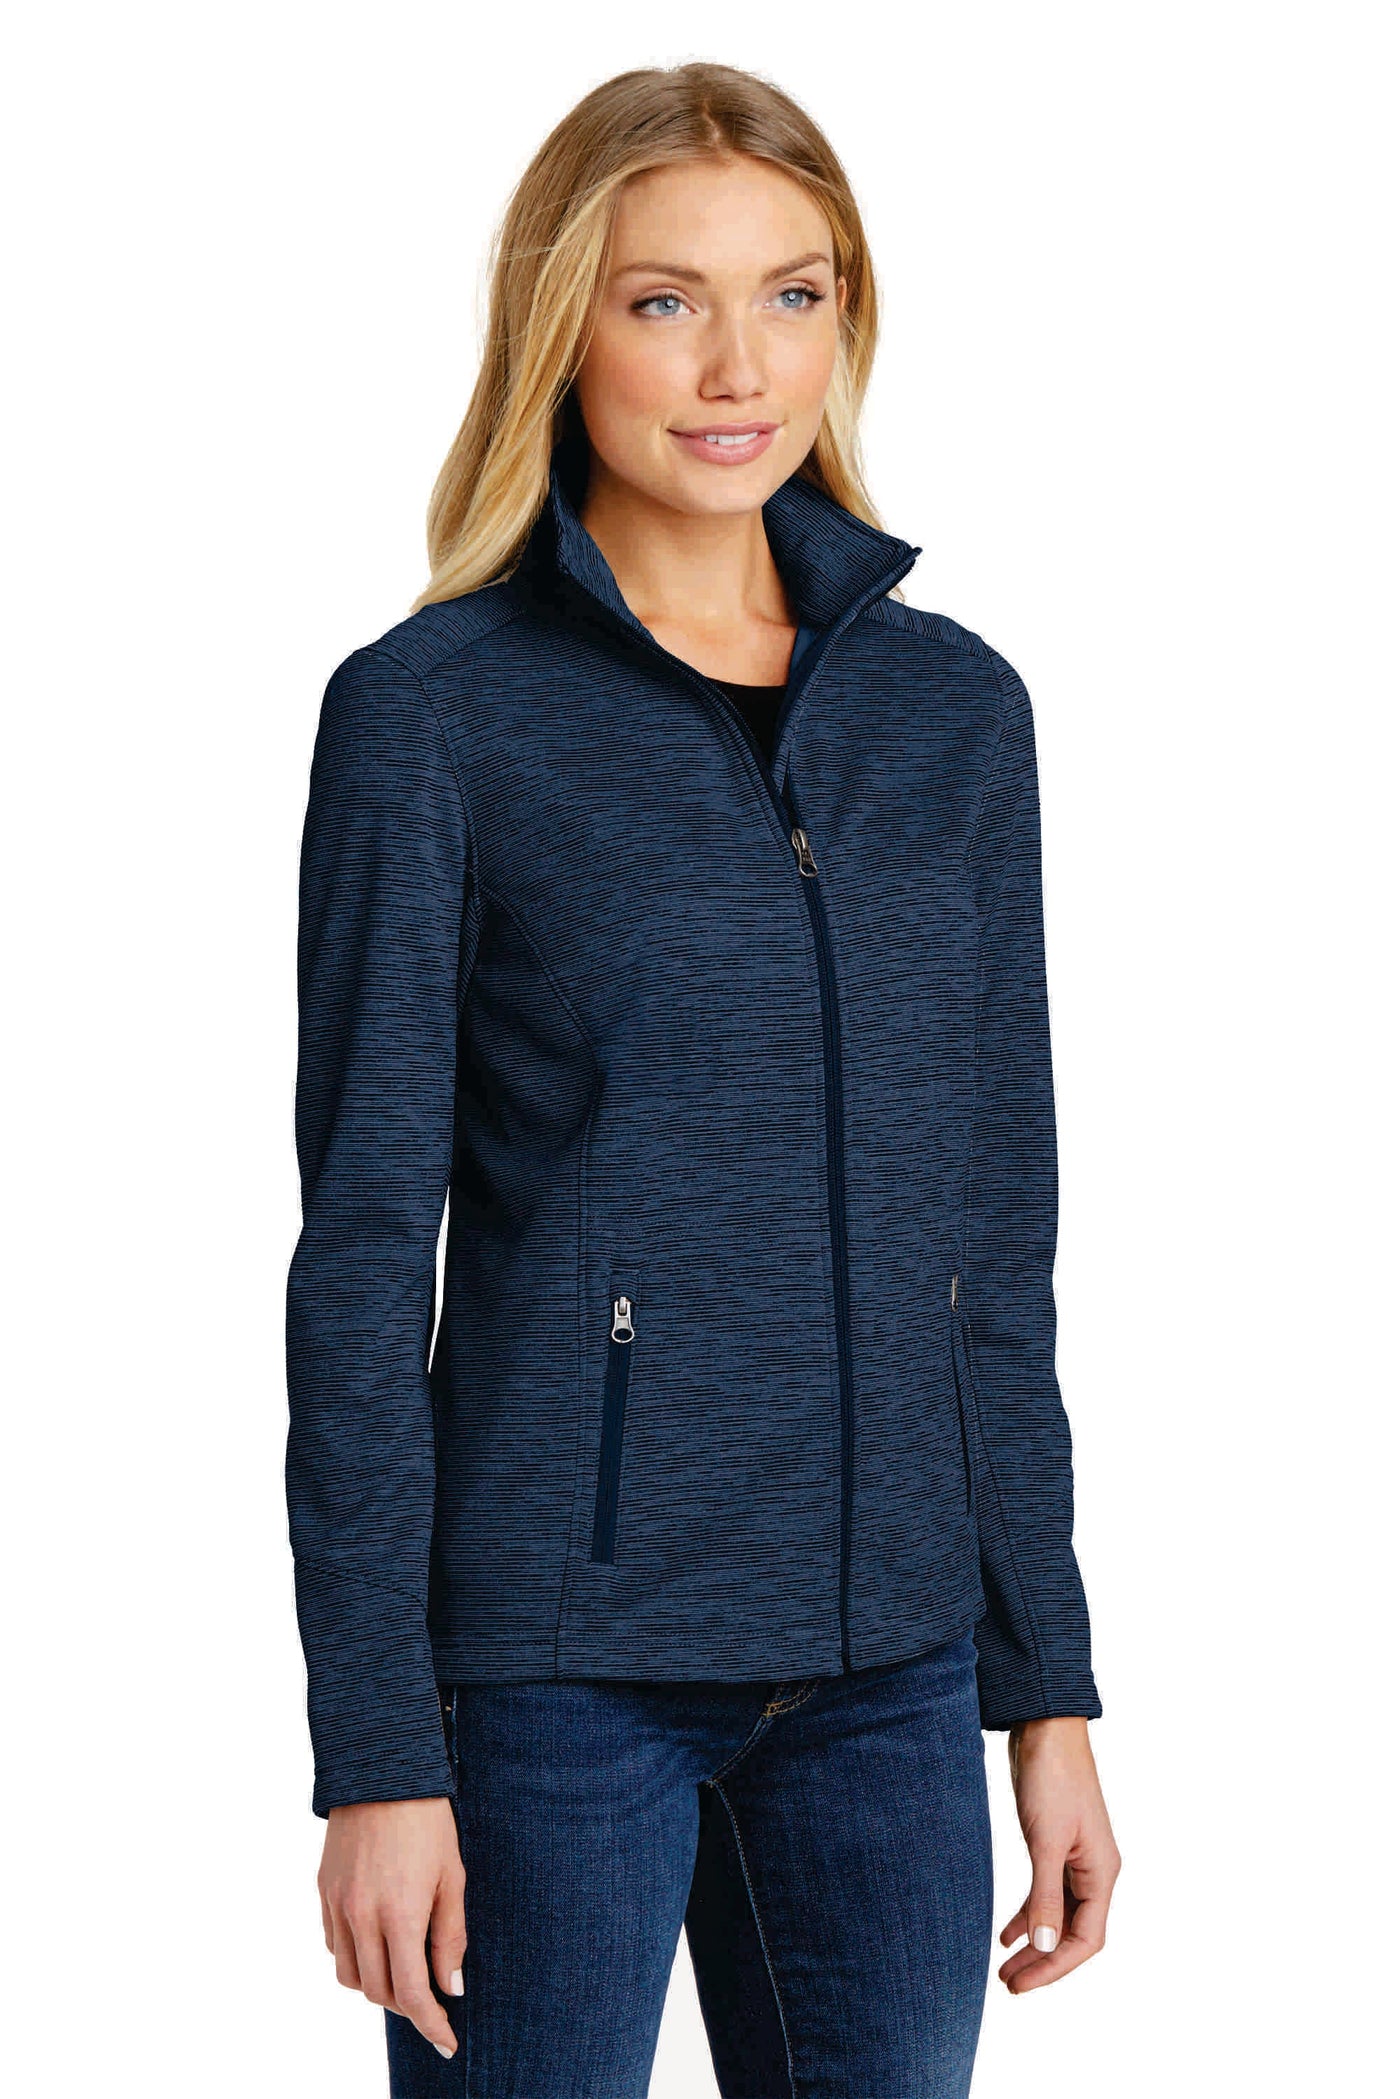 # Port Authority® Women's Digi Stripe Fleece Jacket. L231